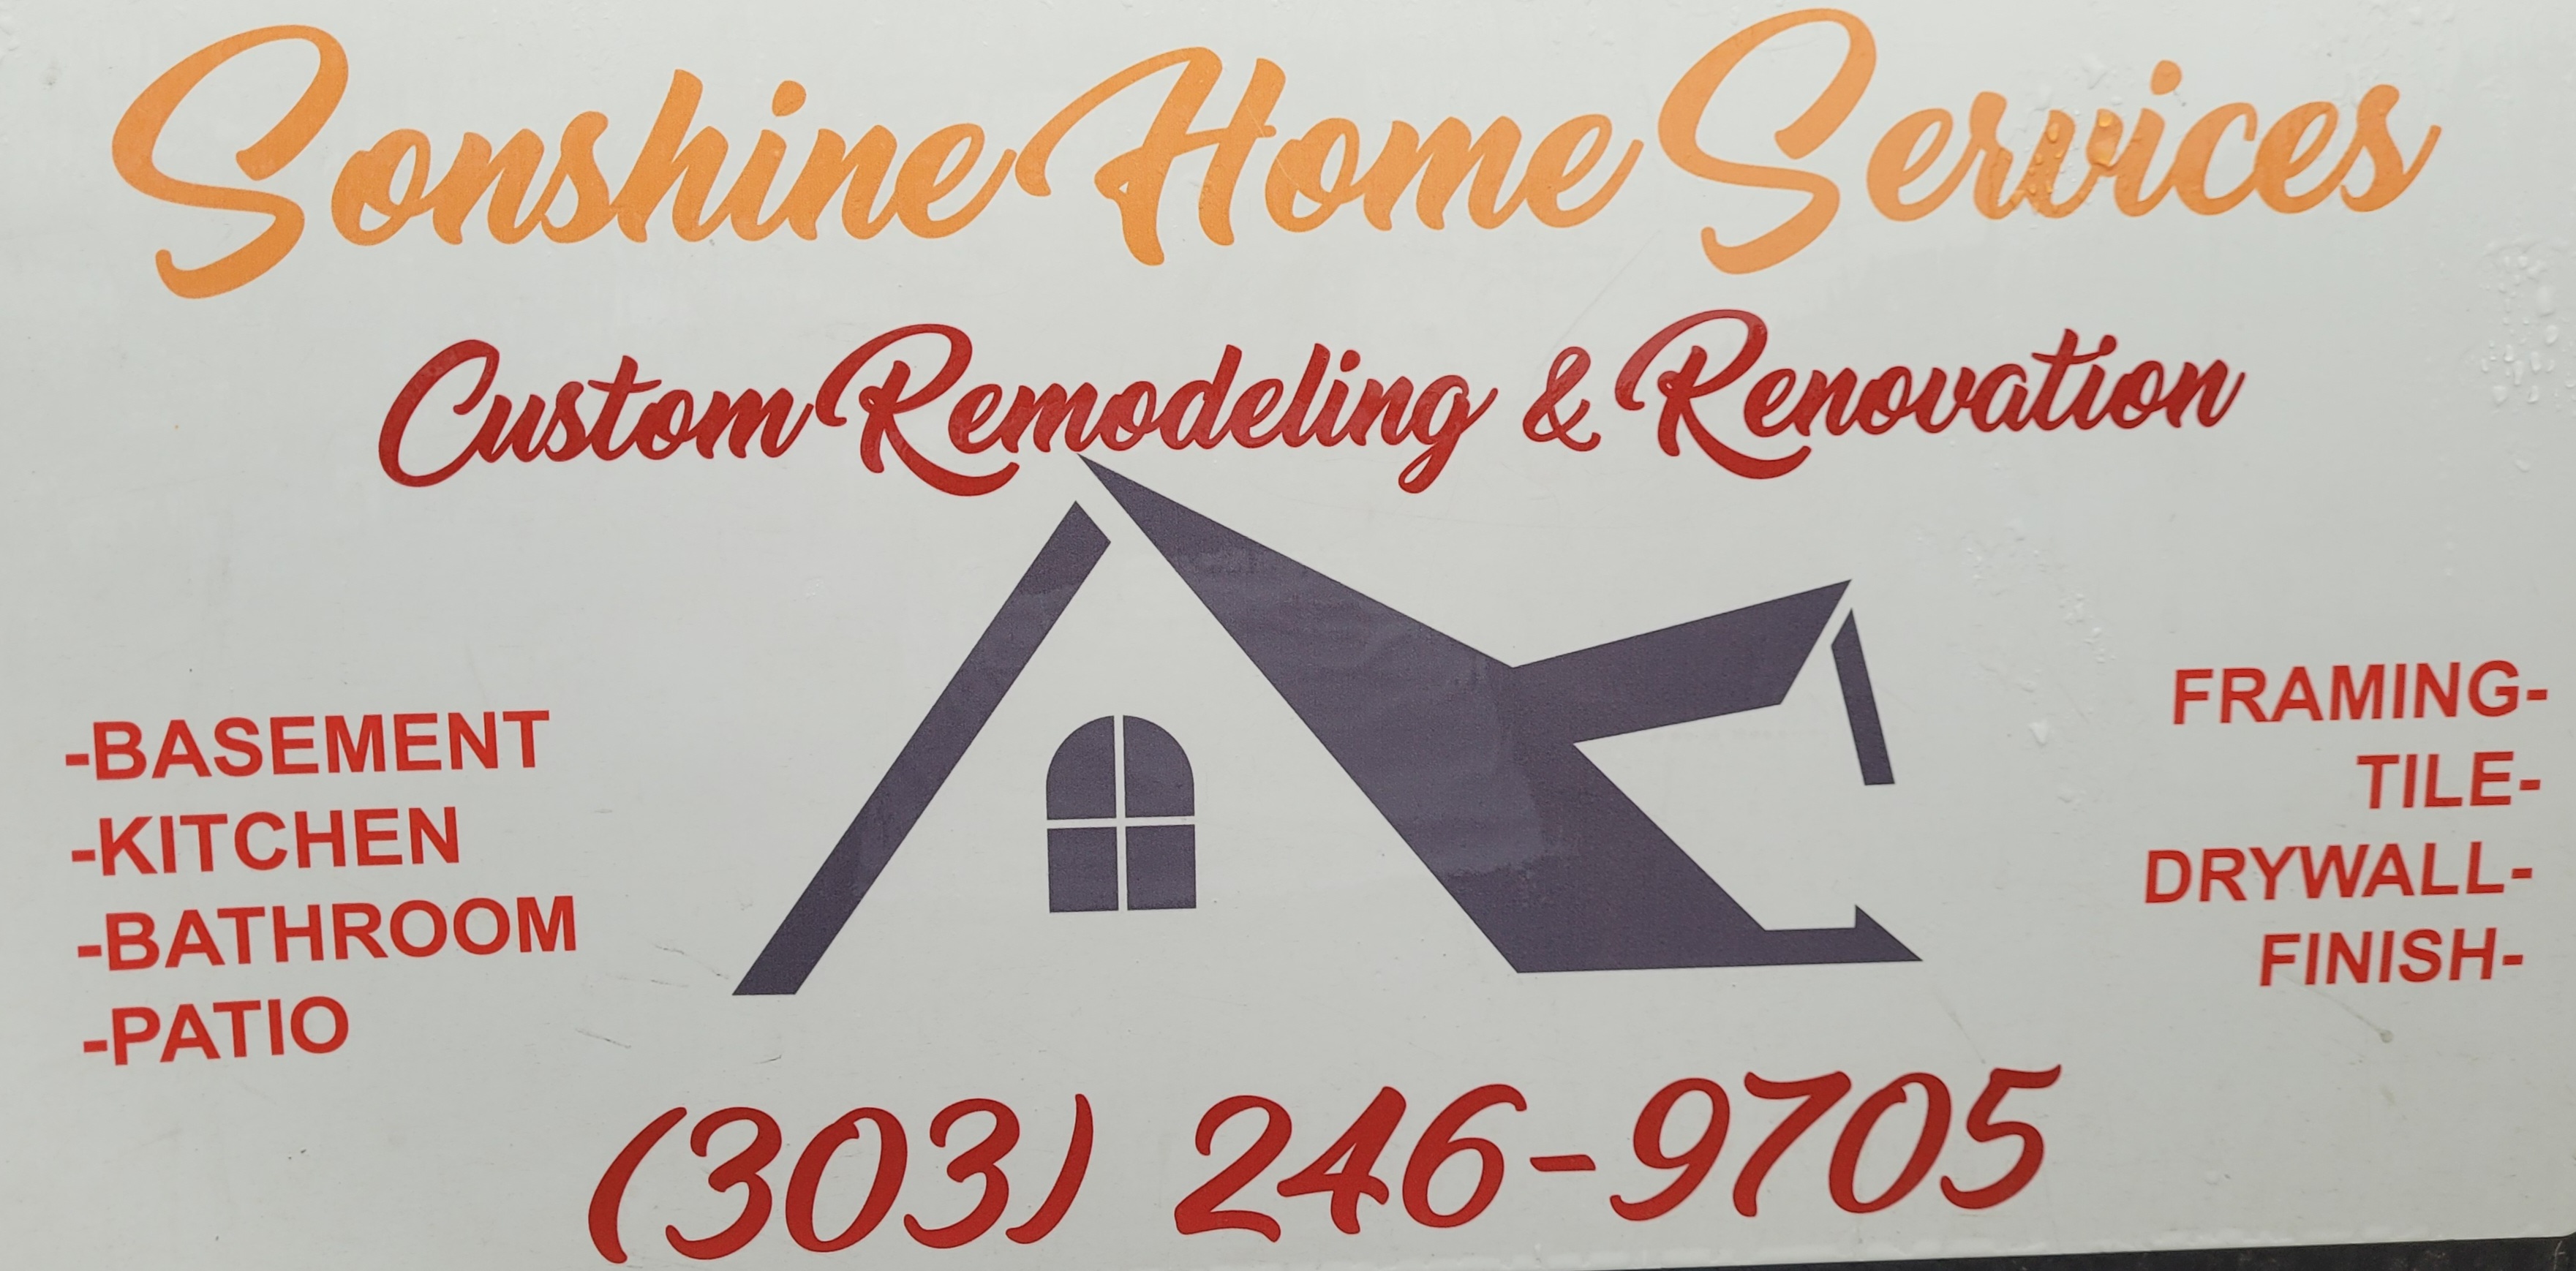 Sonshine  Home Services Logo